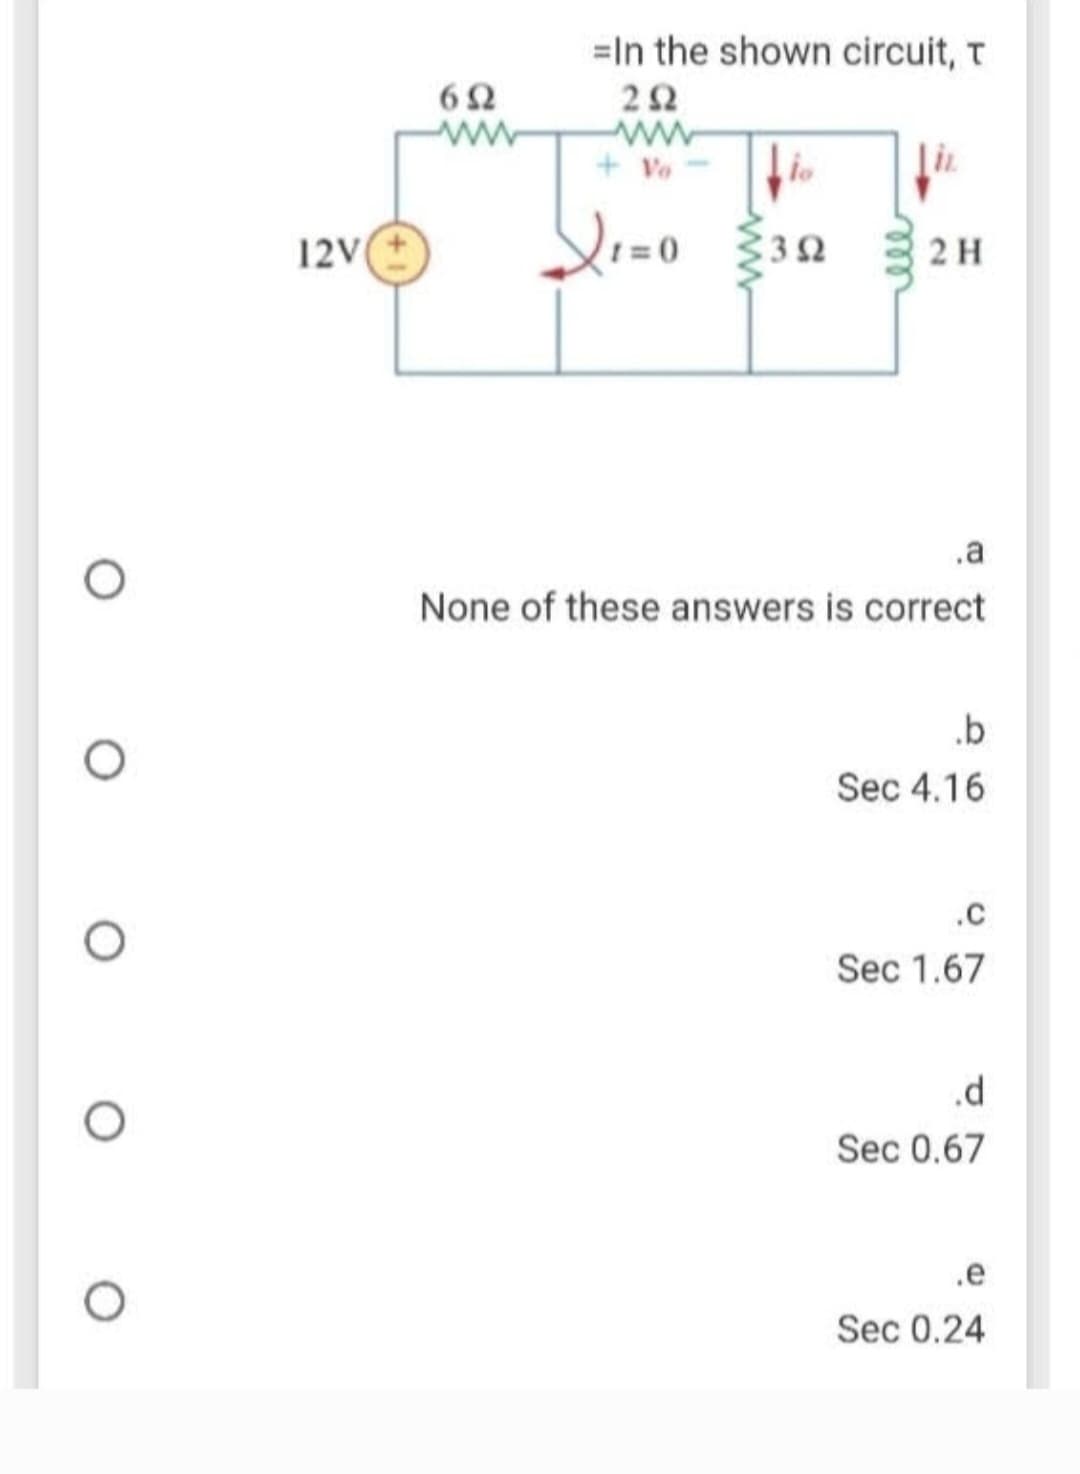 12V
652
ww
In the shown circuit, T
292
www
+ Vo
1=0
3Ω
2 H
.a
None of these answers is correct
.b
Sec 4.16
.C
Sec 1.67
.d
Sec 0.67
.e
Sec 0.24